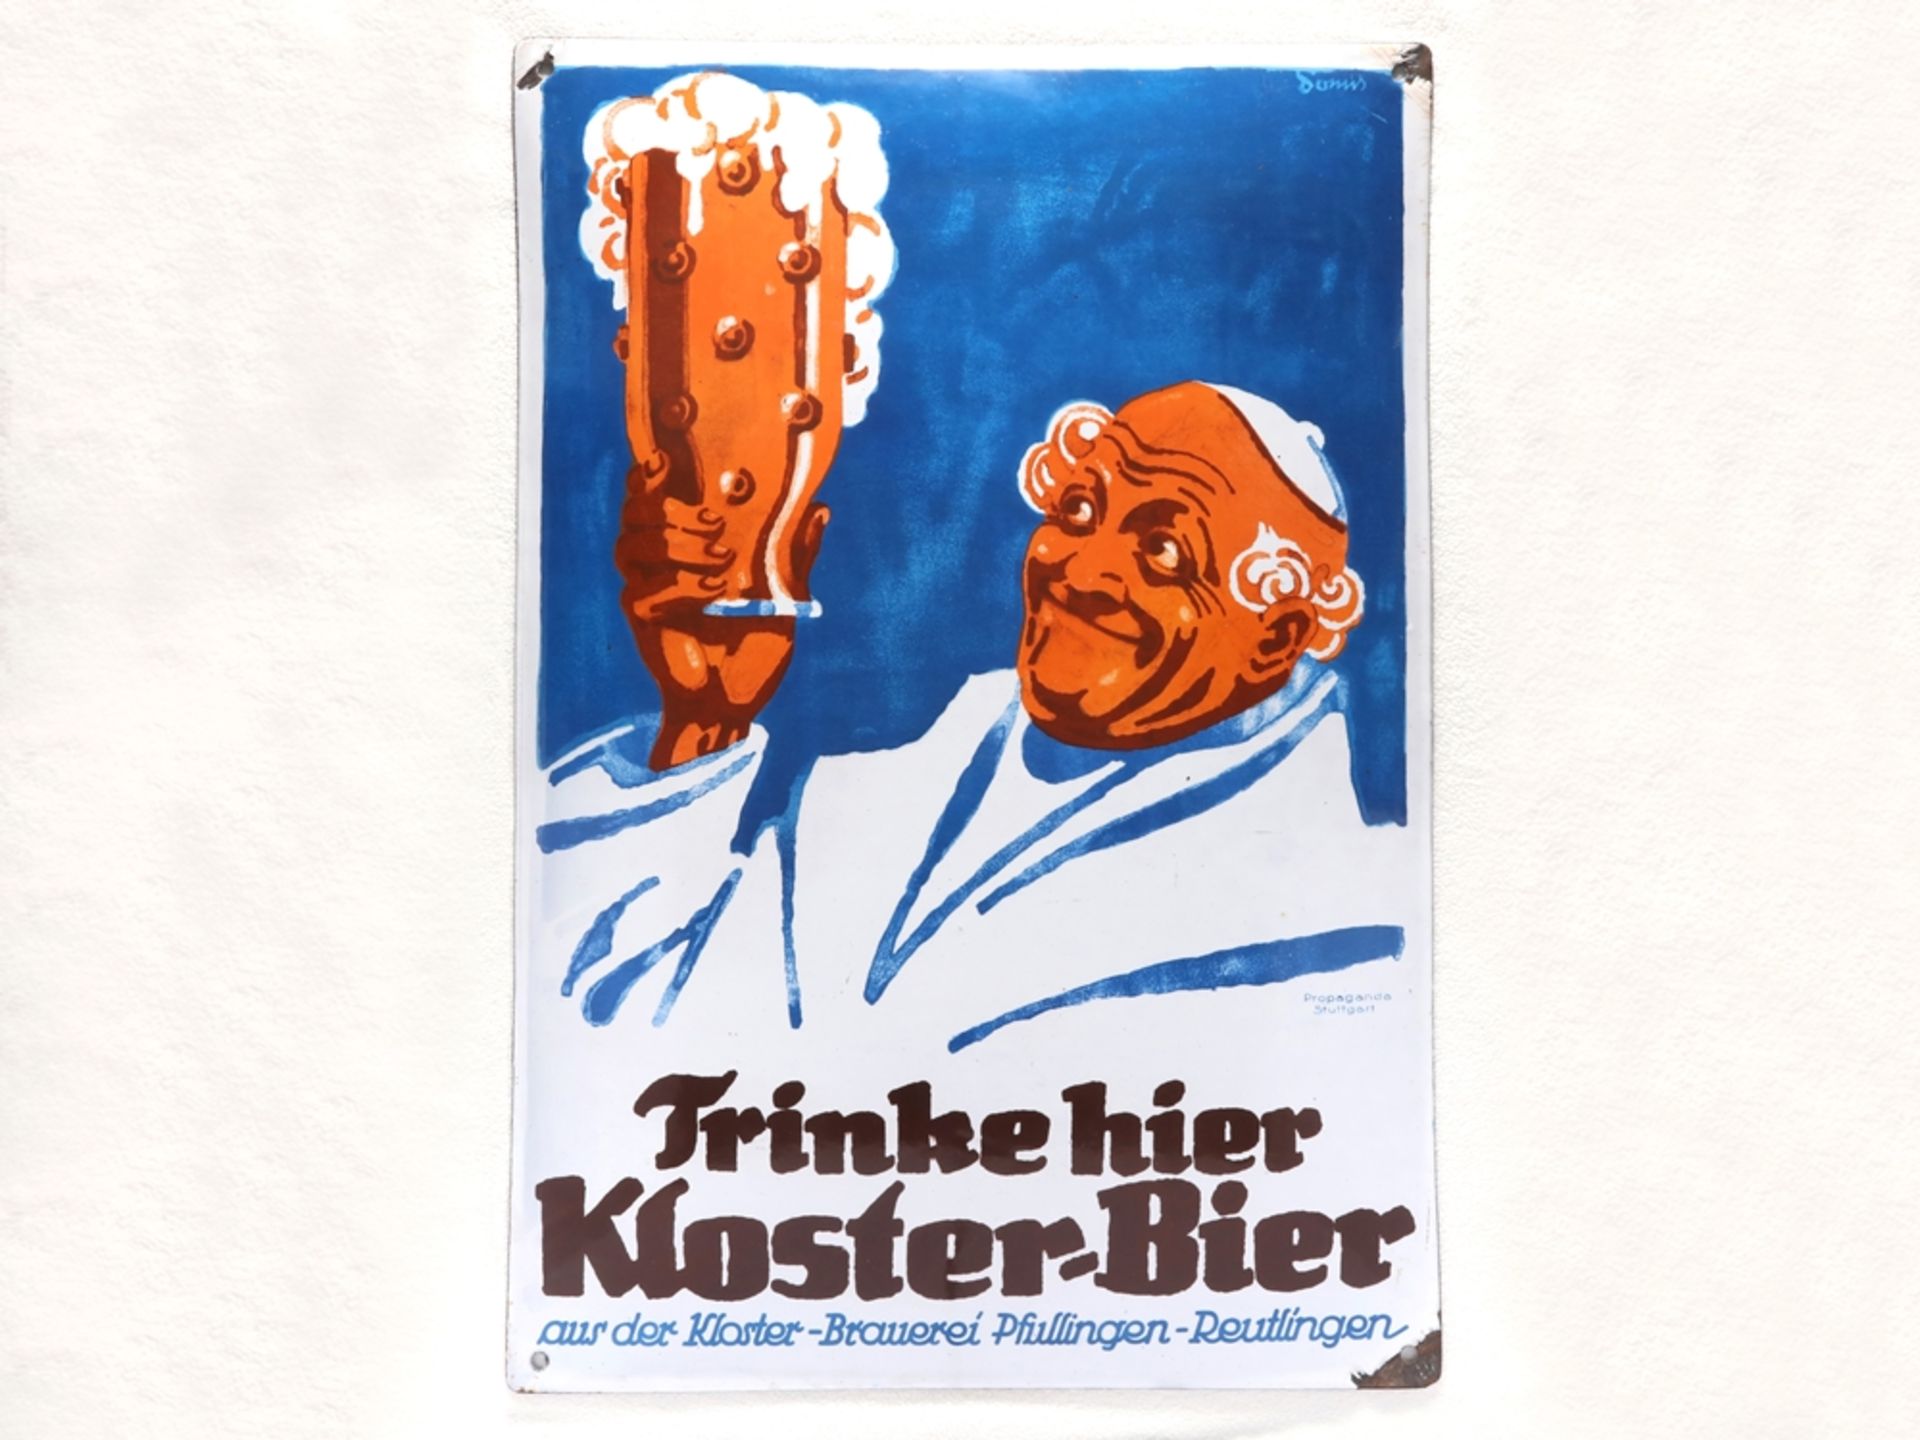 Enamel sign Trinke hier Kloster Bier, Pfullingen-Reutlingen, around 1920 - Image 7 of 7